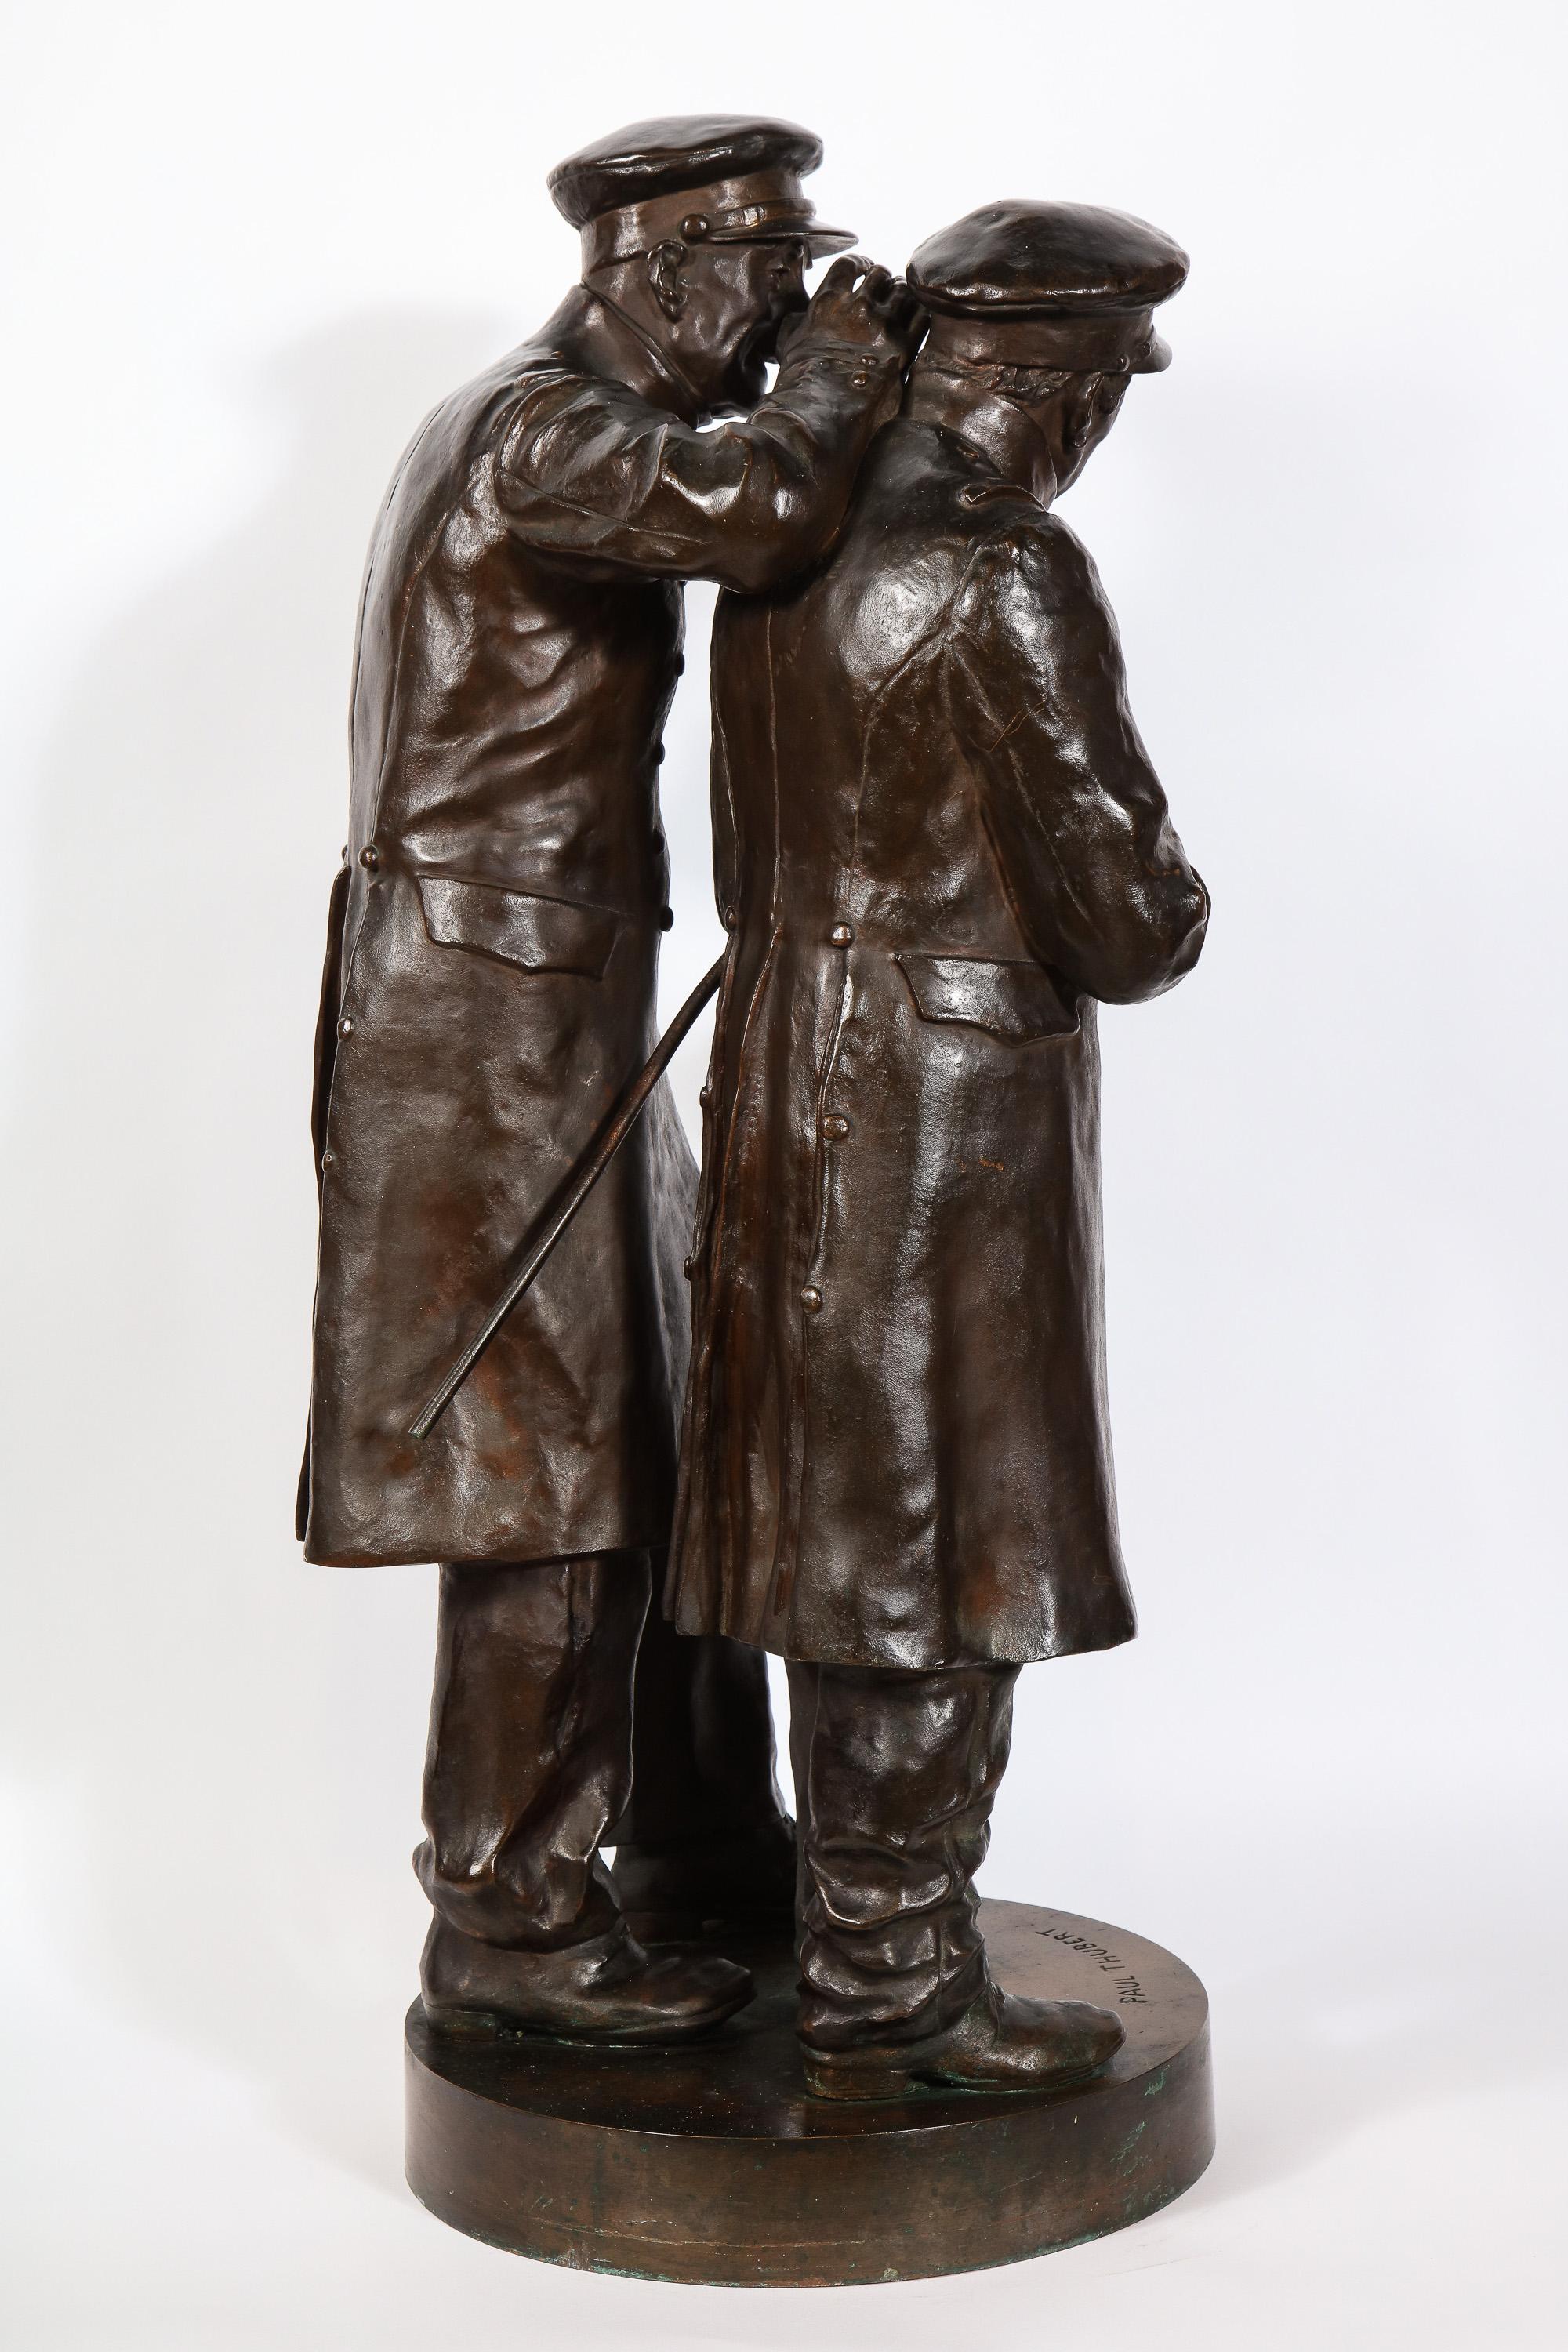 Paul Thubert 'English, 19th Century' a Large Bronze Sculpture of War Veterans For Sale 4